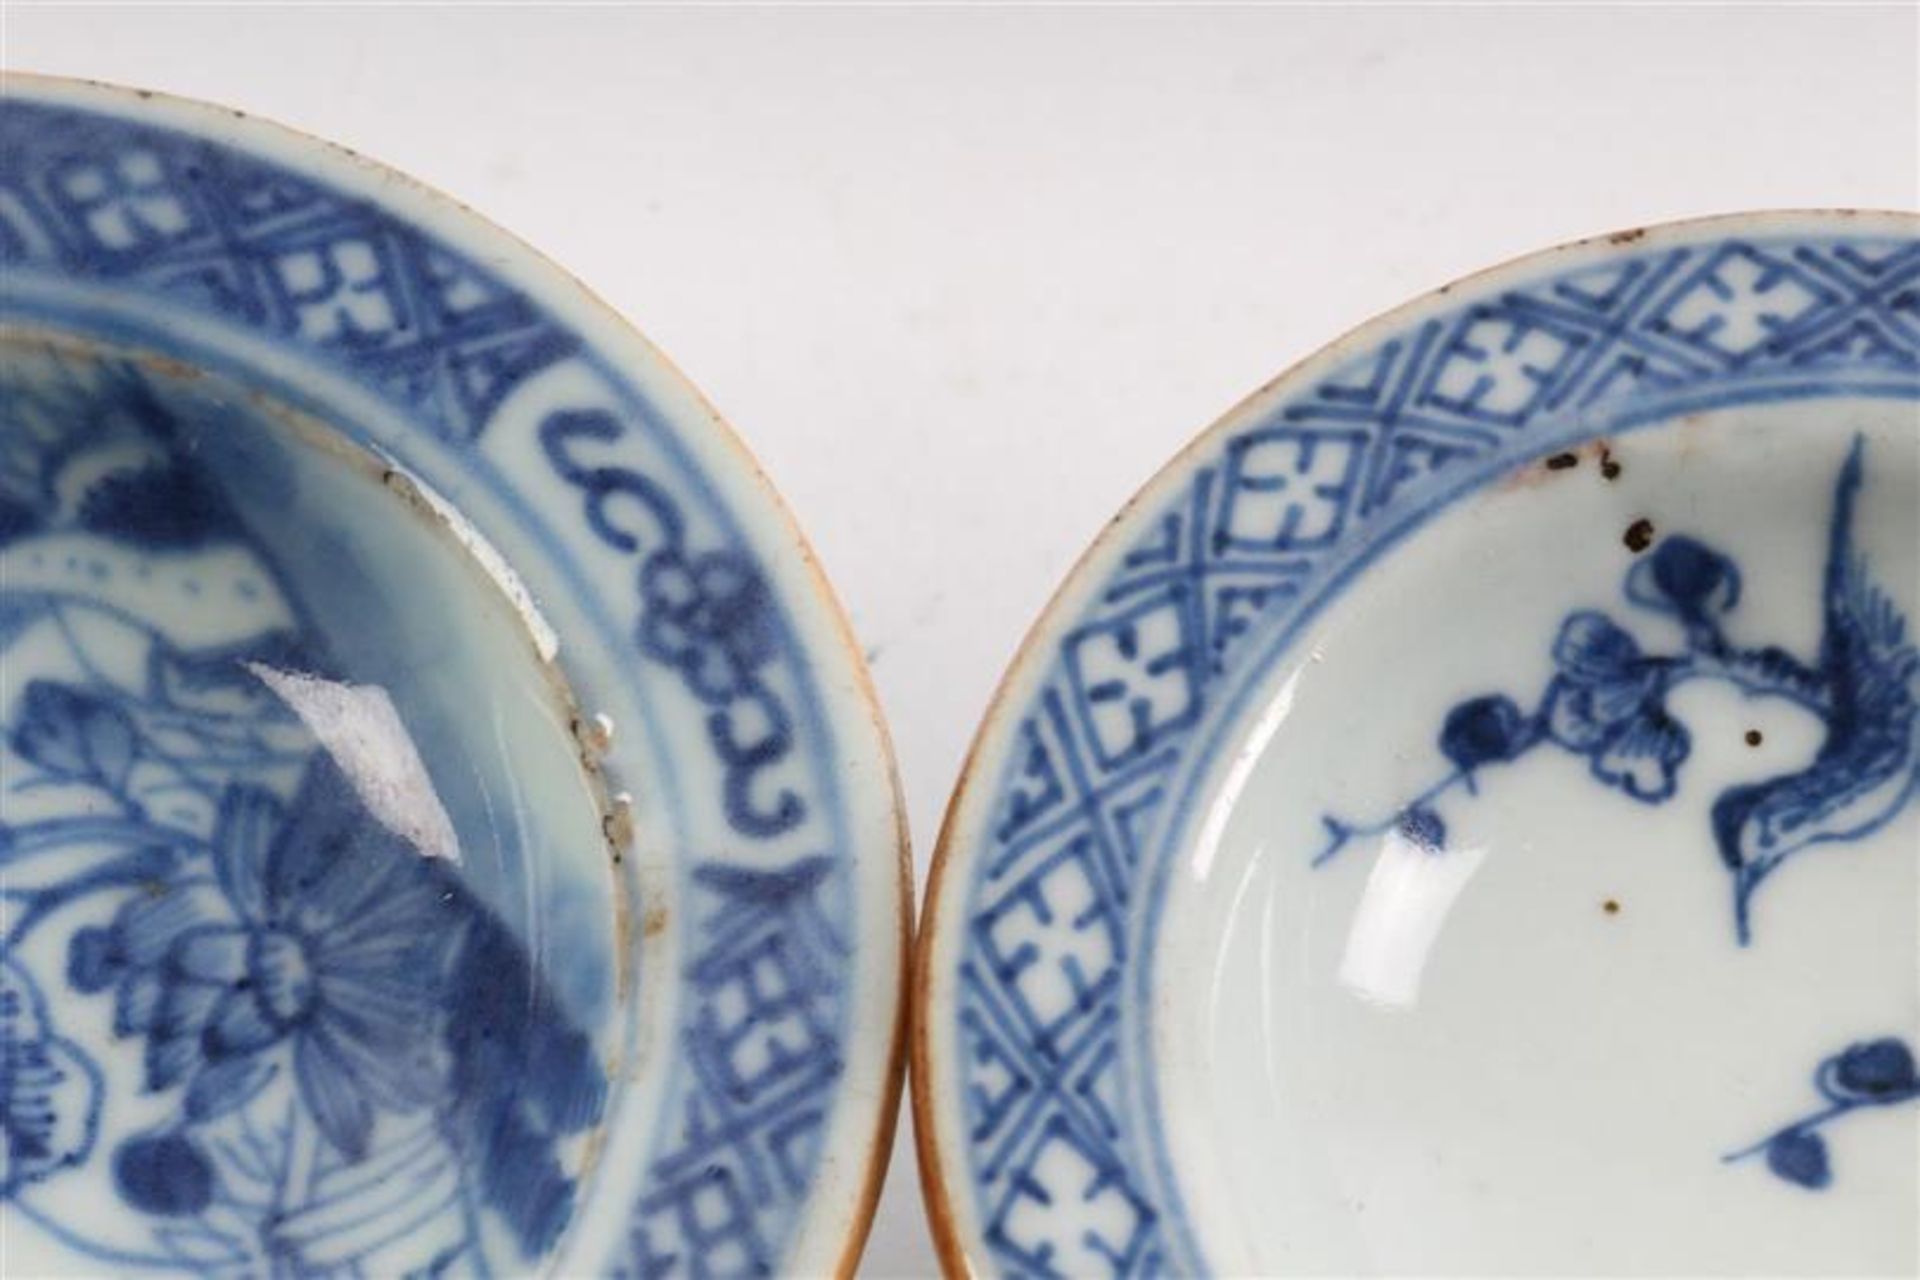 Twee porseleinen zoutvaten, China, 18e eeuw. HxD: 4 x 9.3 en 4.4 x 8.5 cm. - Bild 4 aus 4